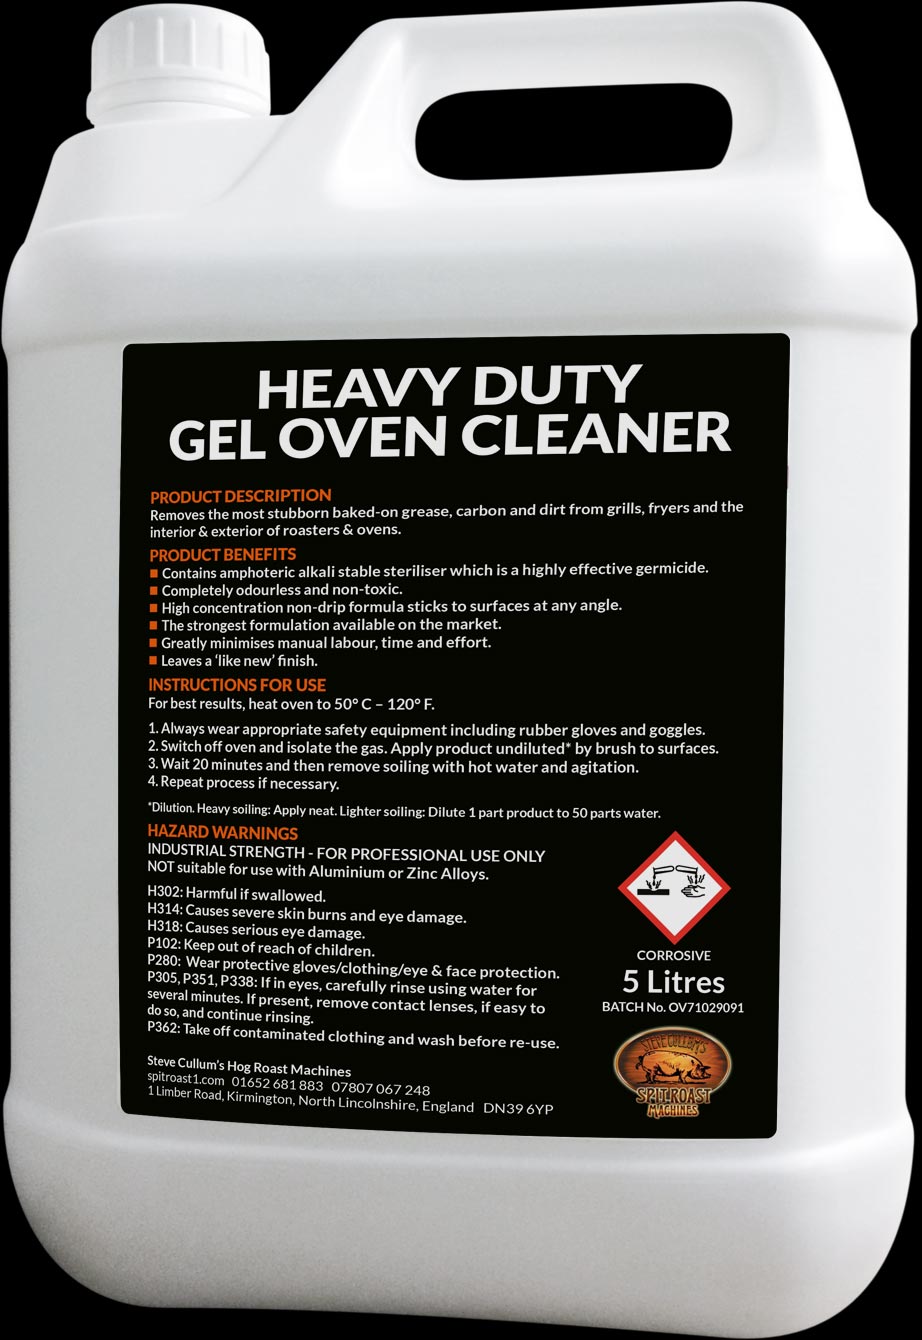 The Elite Heavy Duty Gel Oven Cleaner